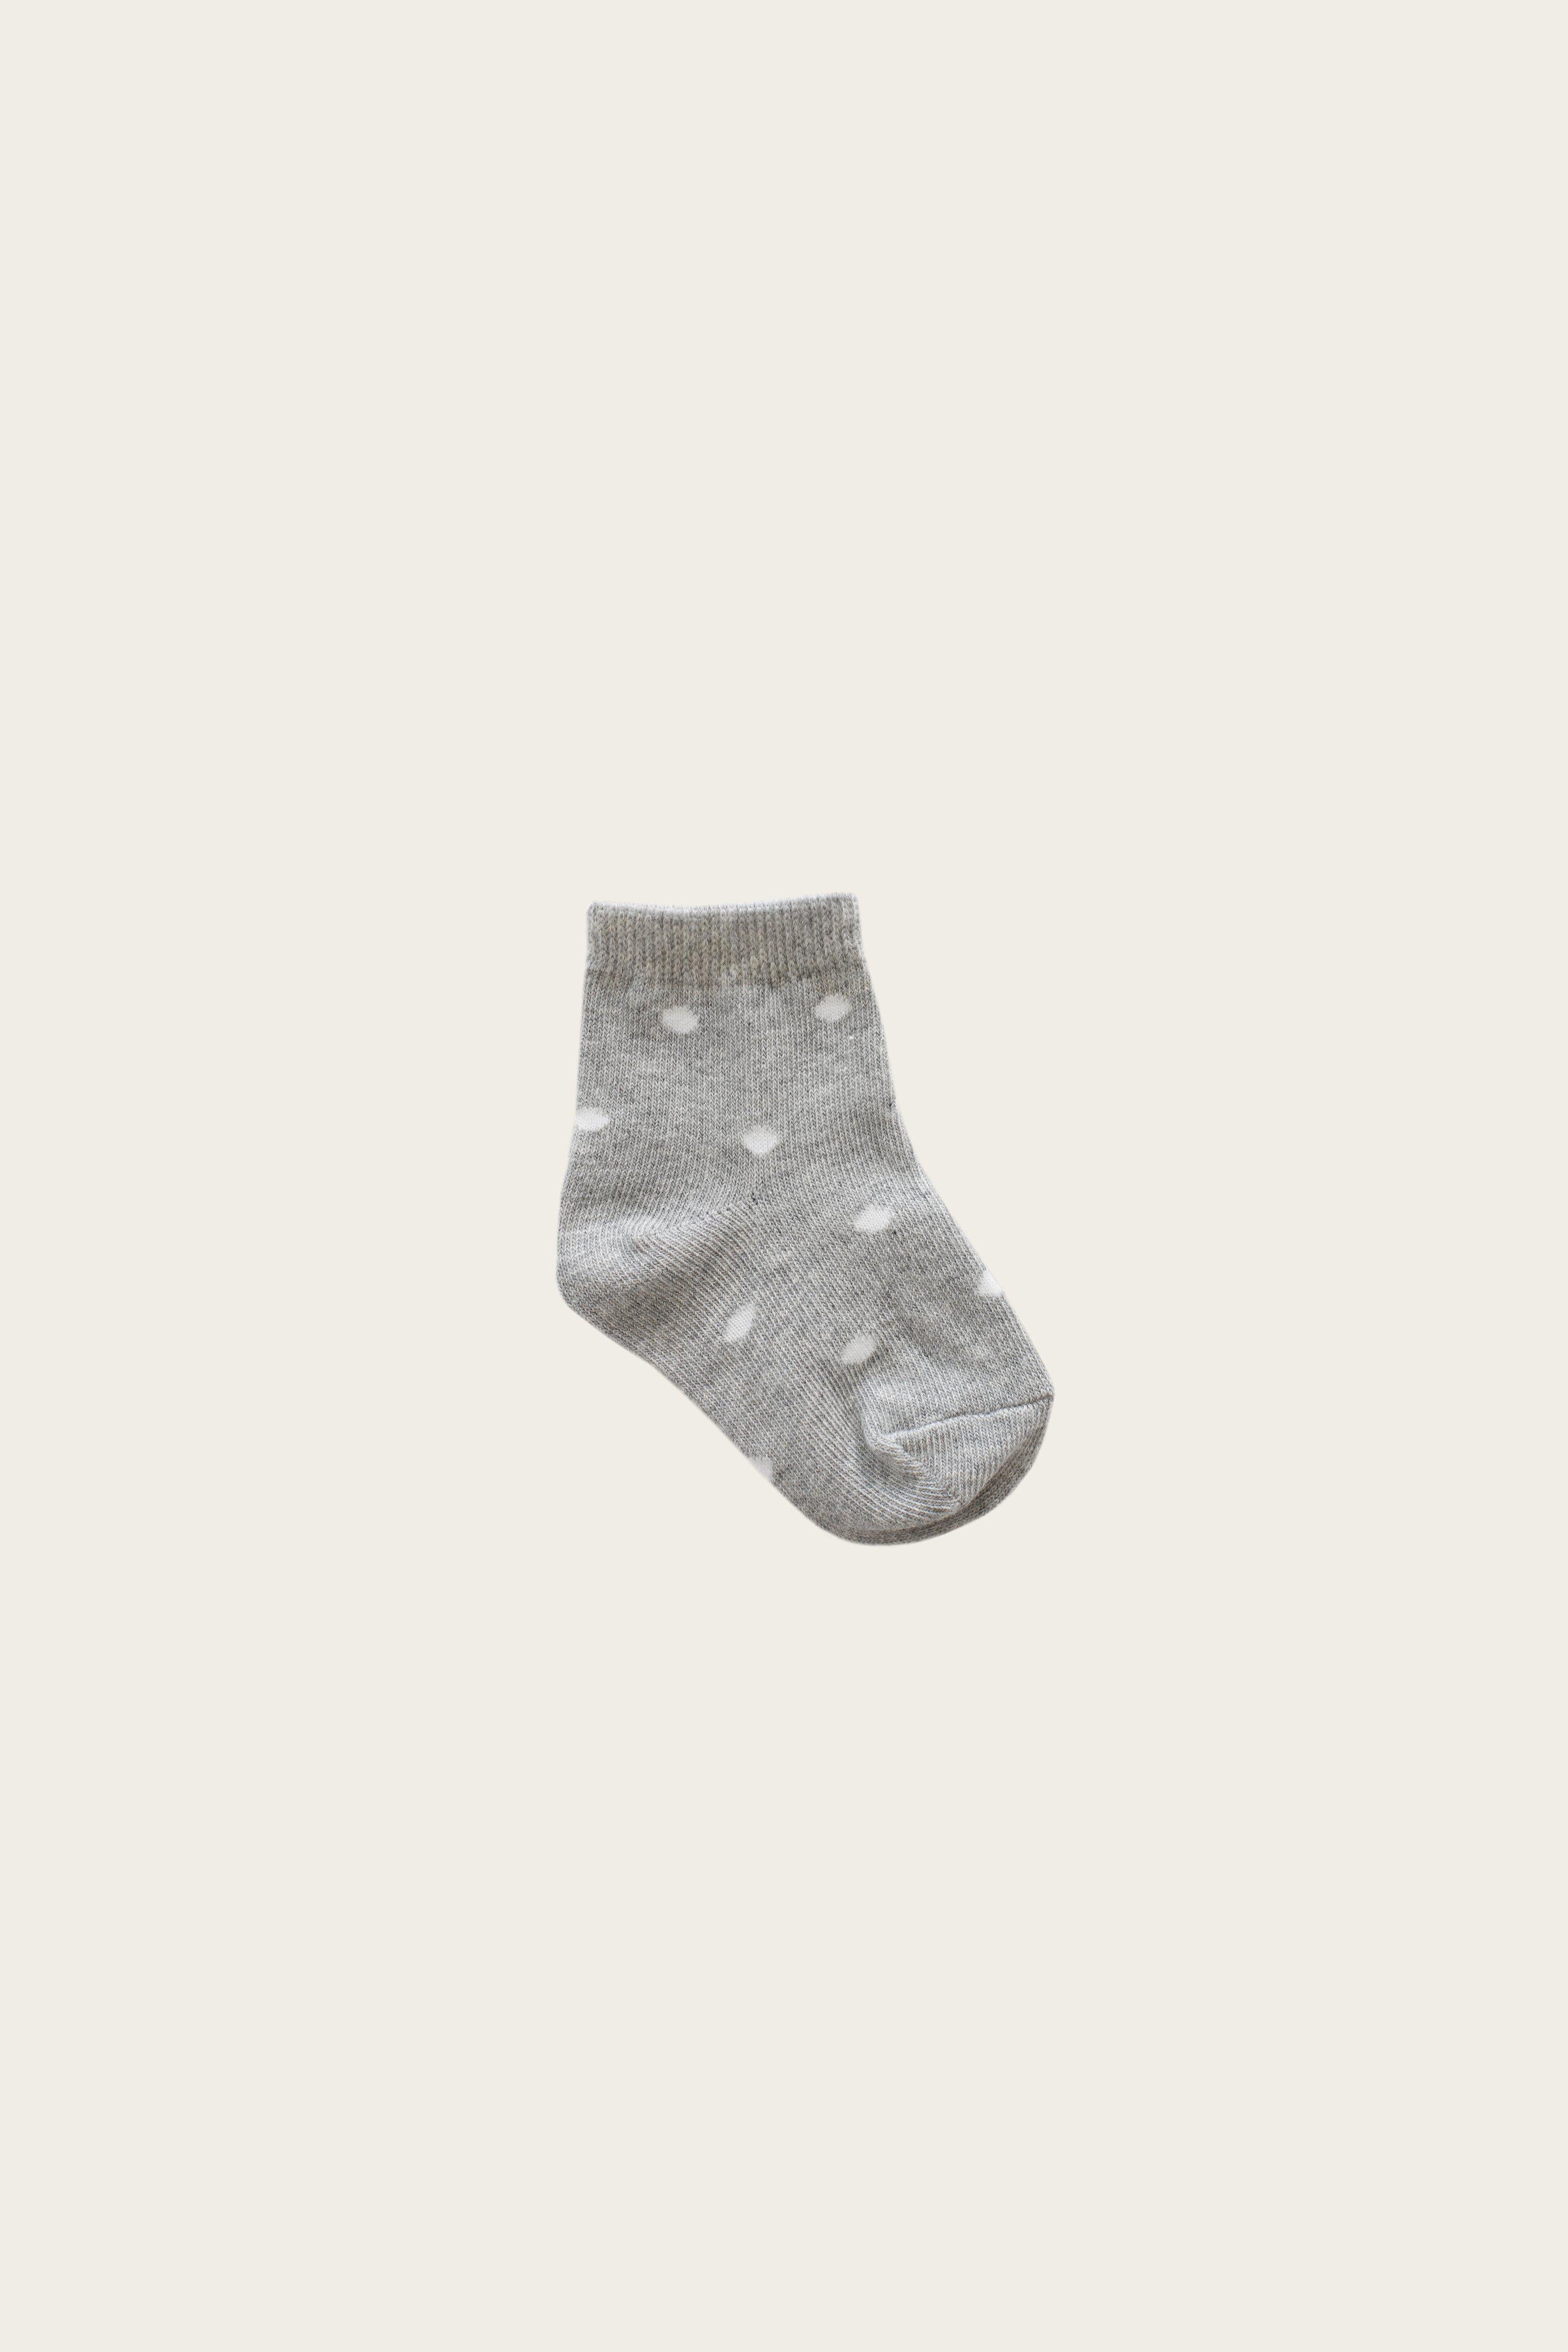 Dotty Sock - Light Grey Marle-Shoes & Socks-Jamie Kay-The Bay Room